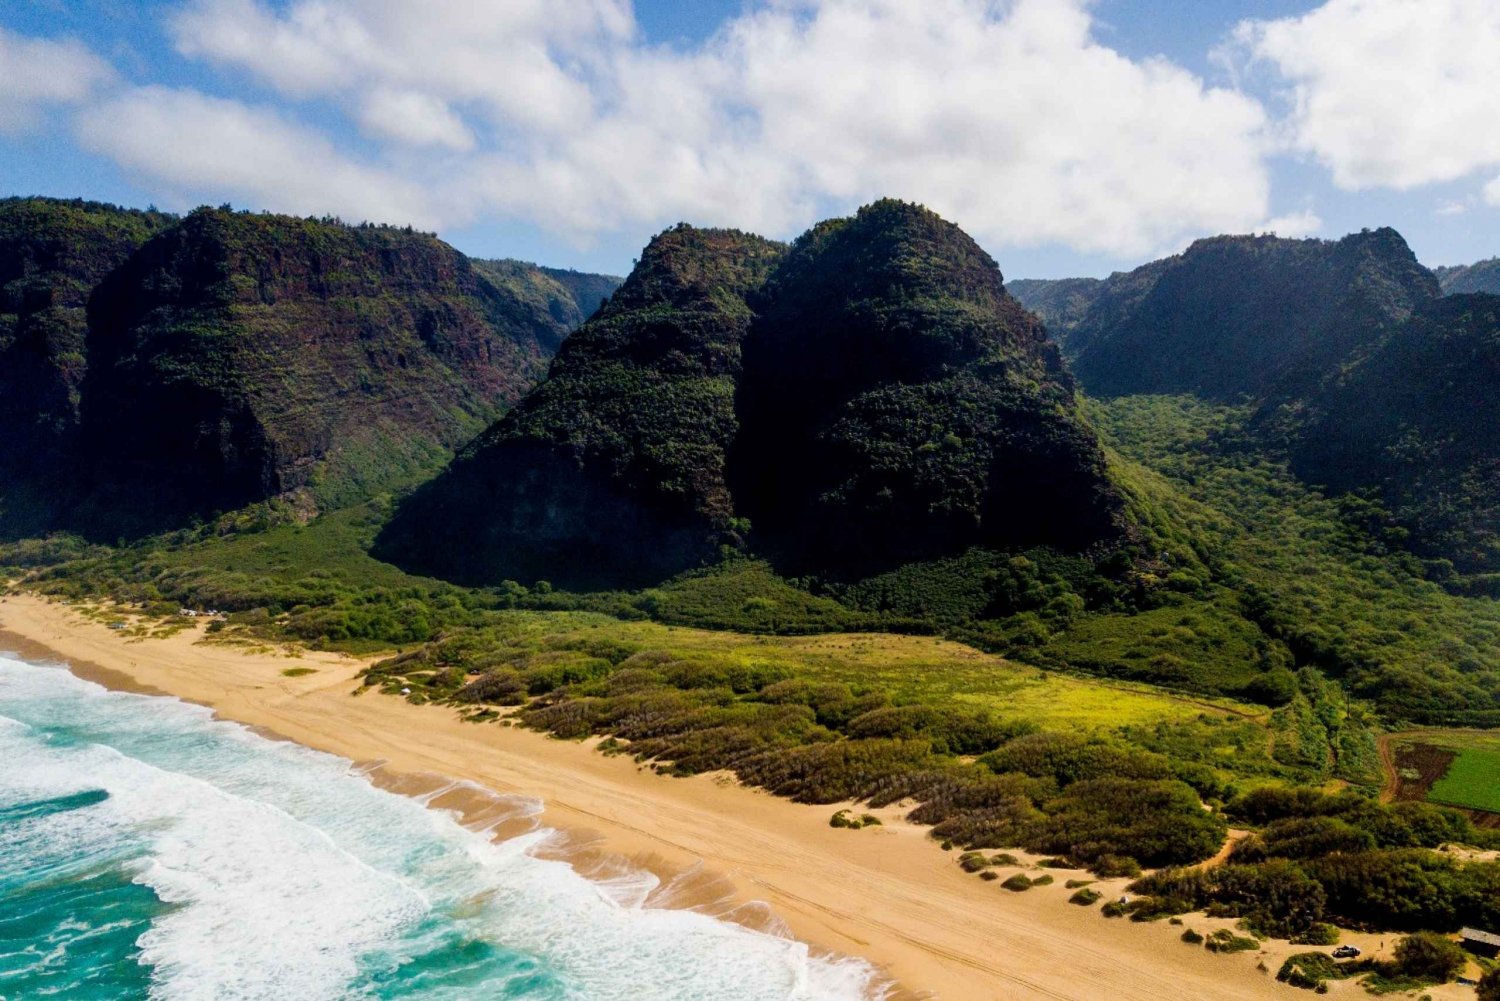 Kauai: Øens højdepunkter - selvguidet audiokøretur